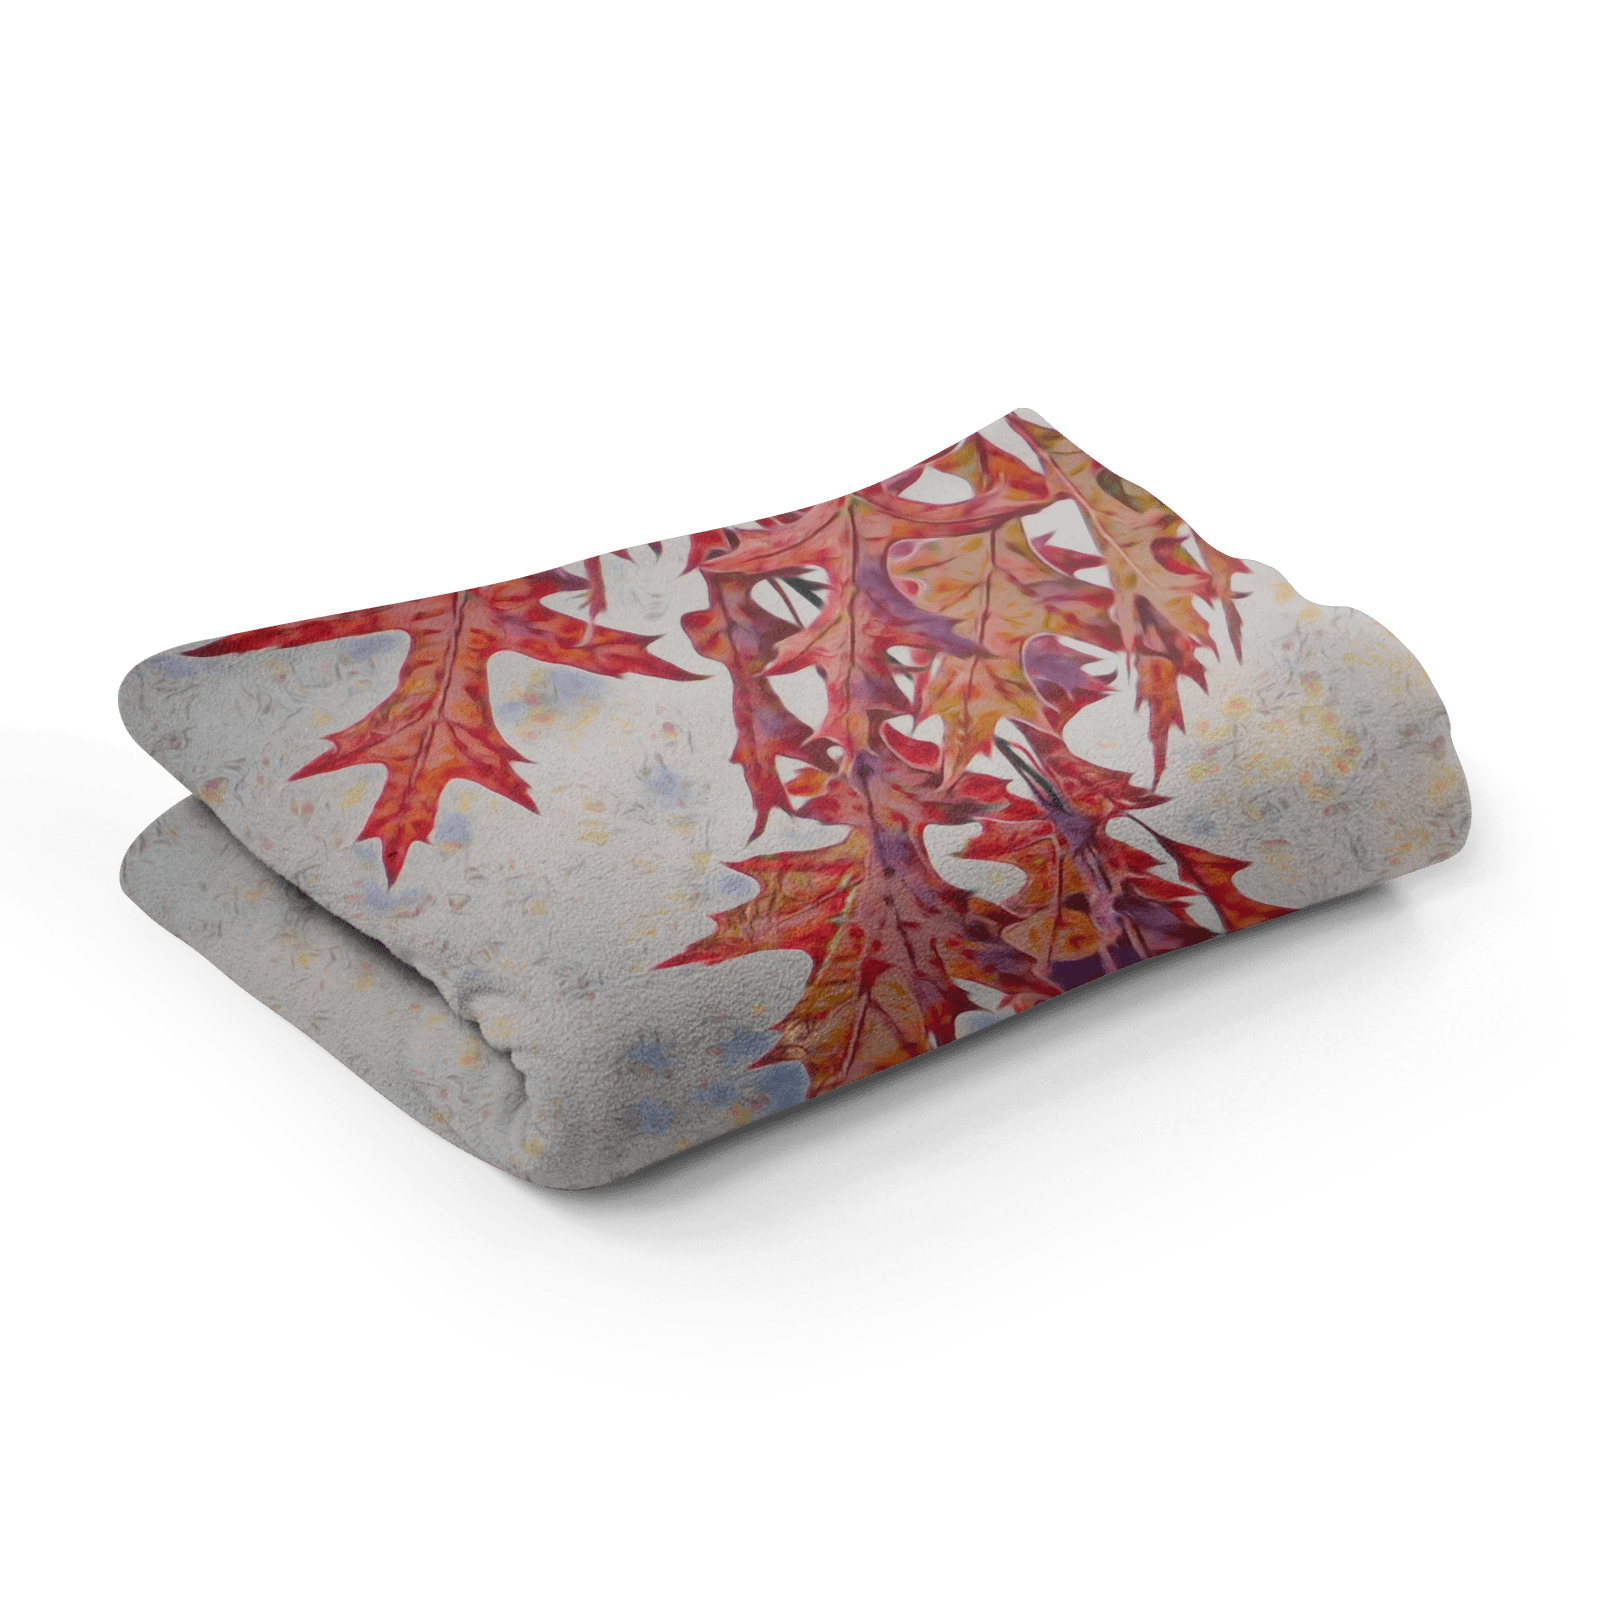 Red oak leafs,Blanket Premium  200 x 150 cm / 60" x 80"